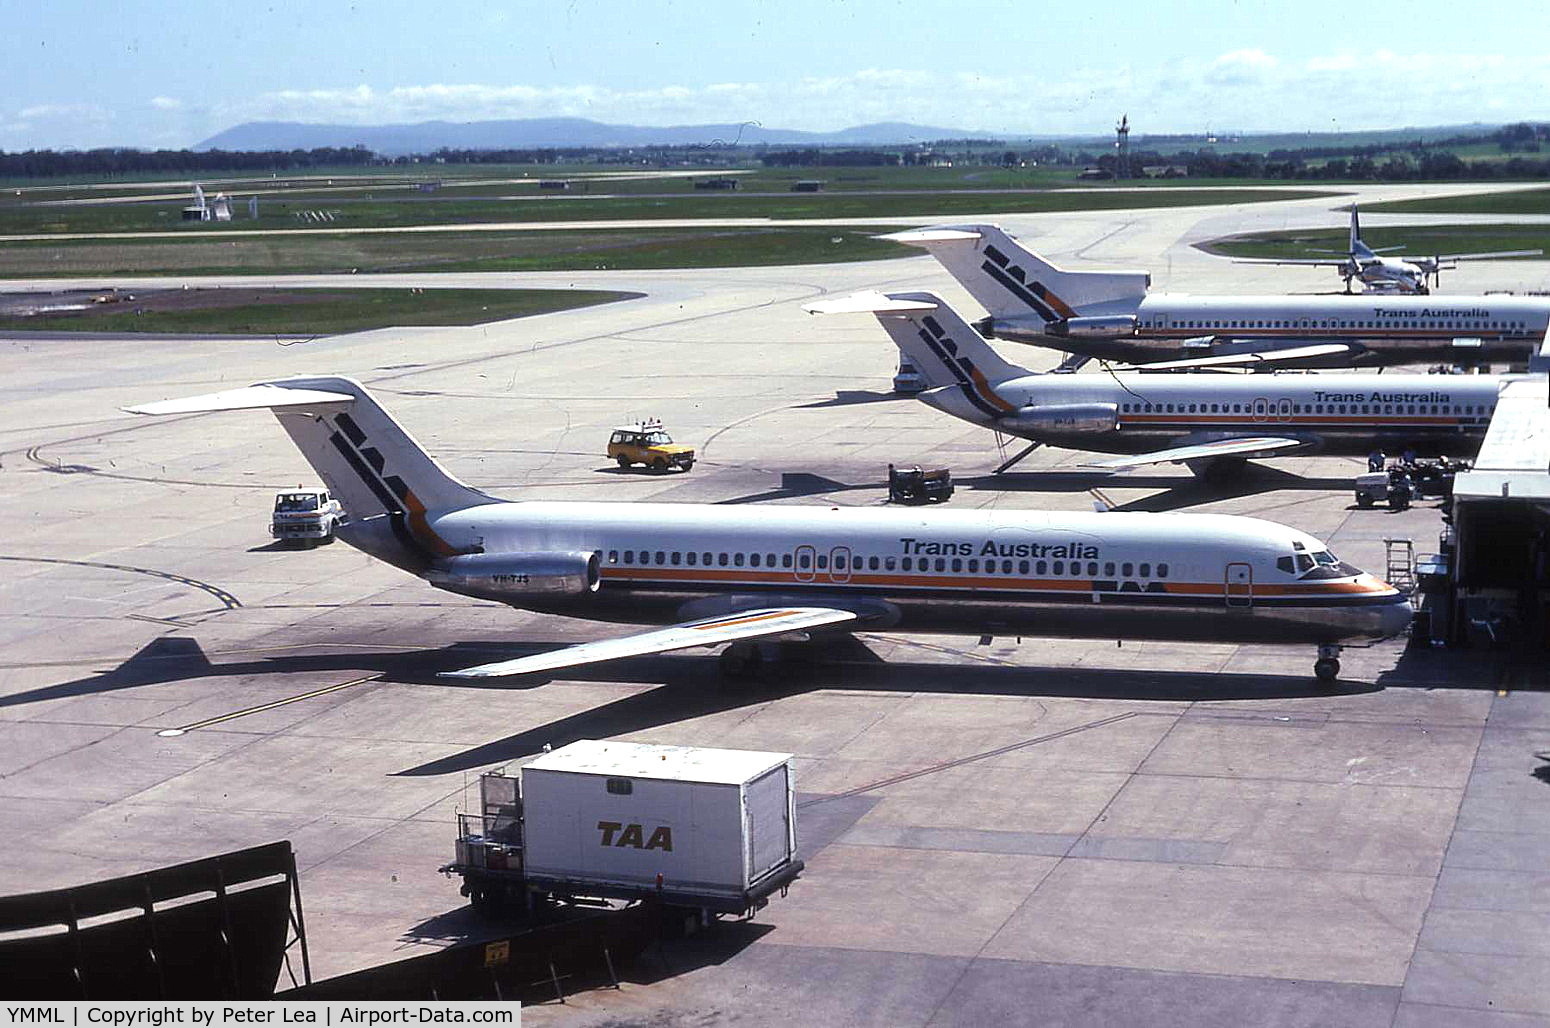 Melbourne International Airport, Tullamarine, Victoria Australia (YMML) - TAA aircraft at Melbourne airport in 1983